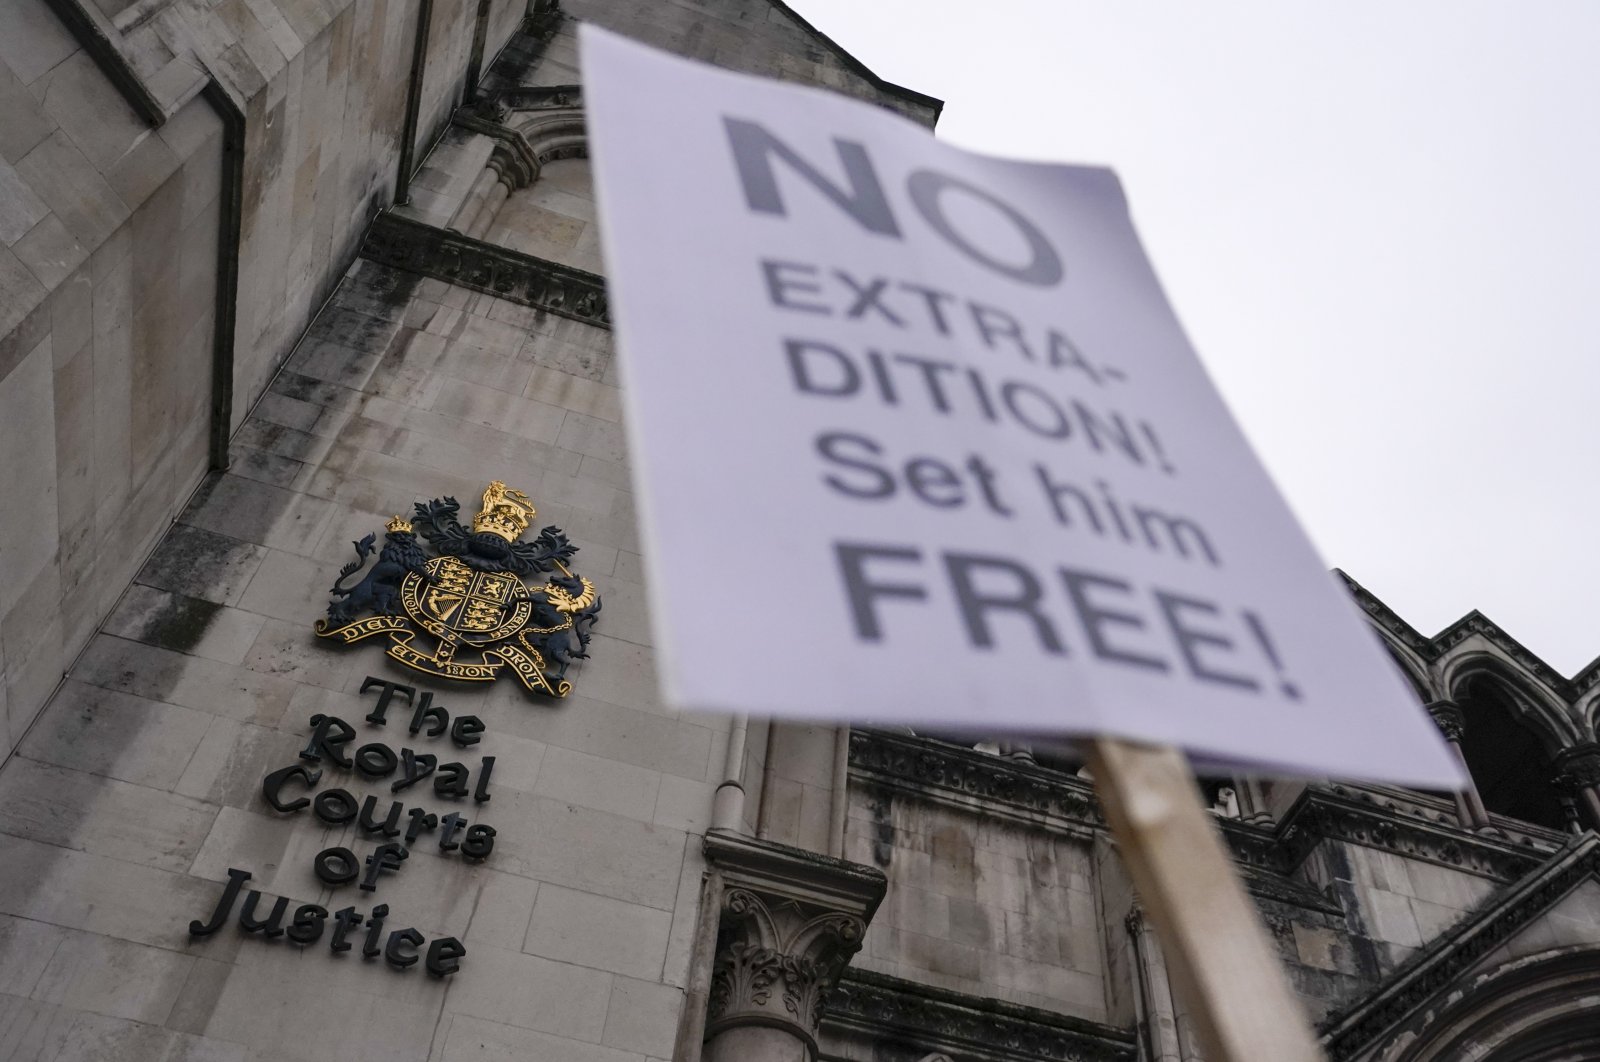 A placard in support of Julian Assange outside the High Court, outside the High Court, in London, England, Jan. 24, 2022. (AP Photo)